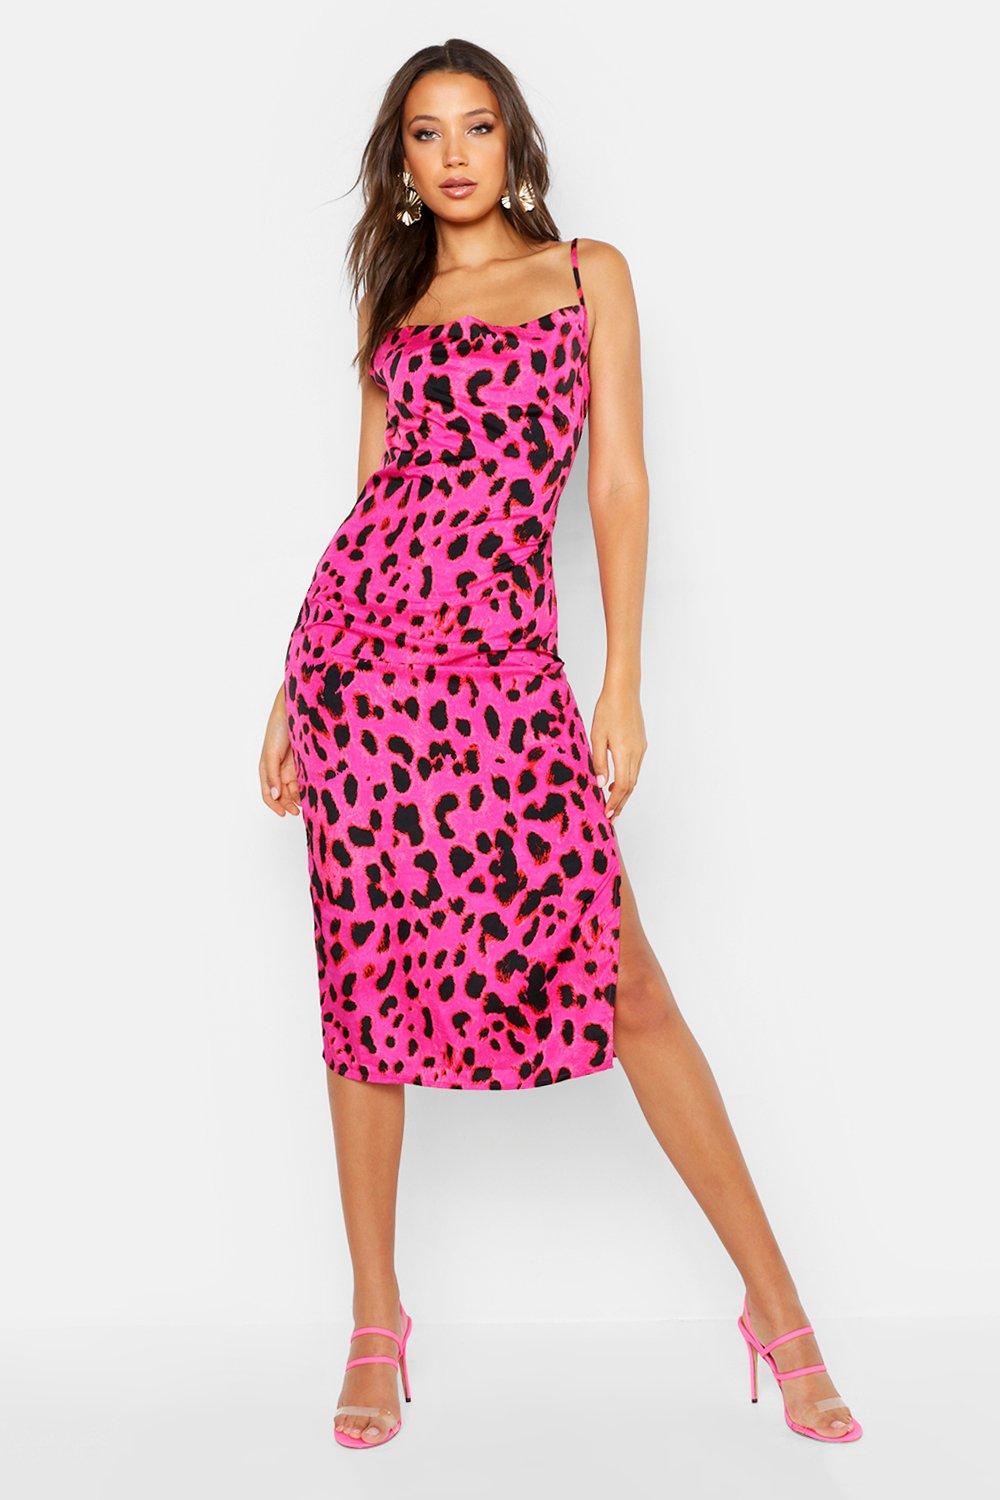 hot pink leopard print dress